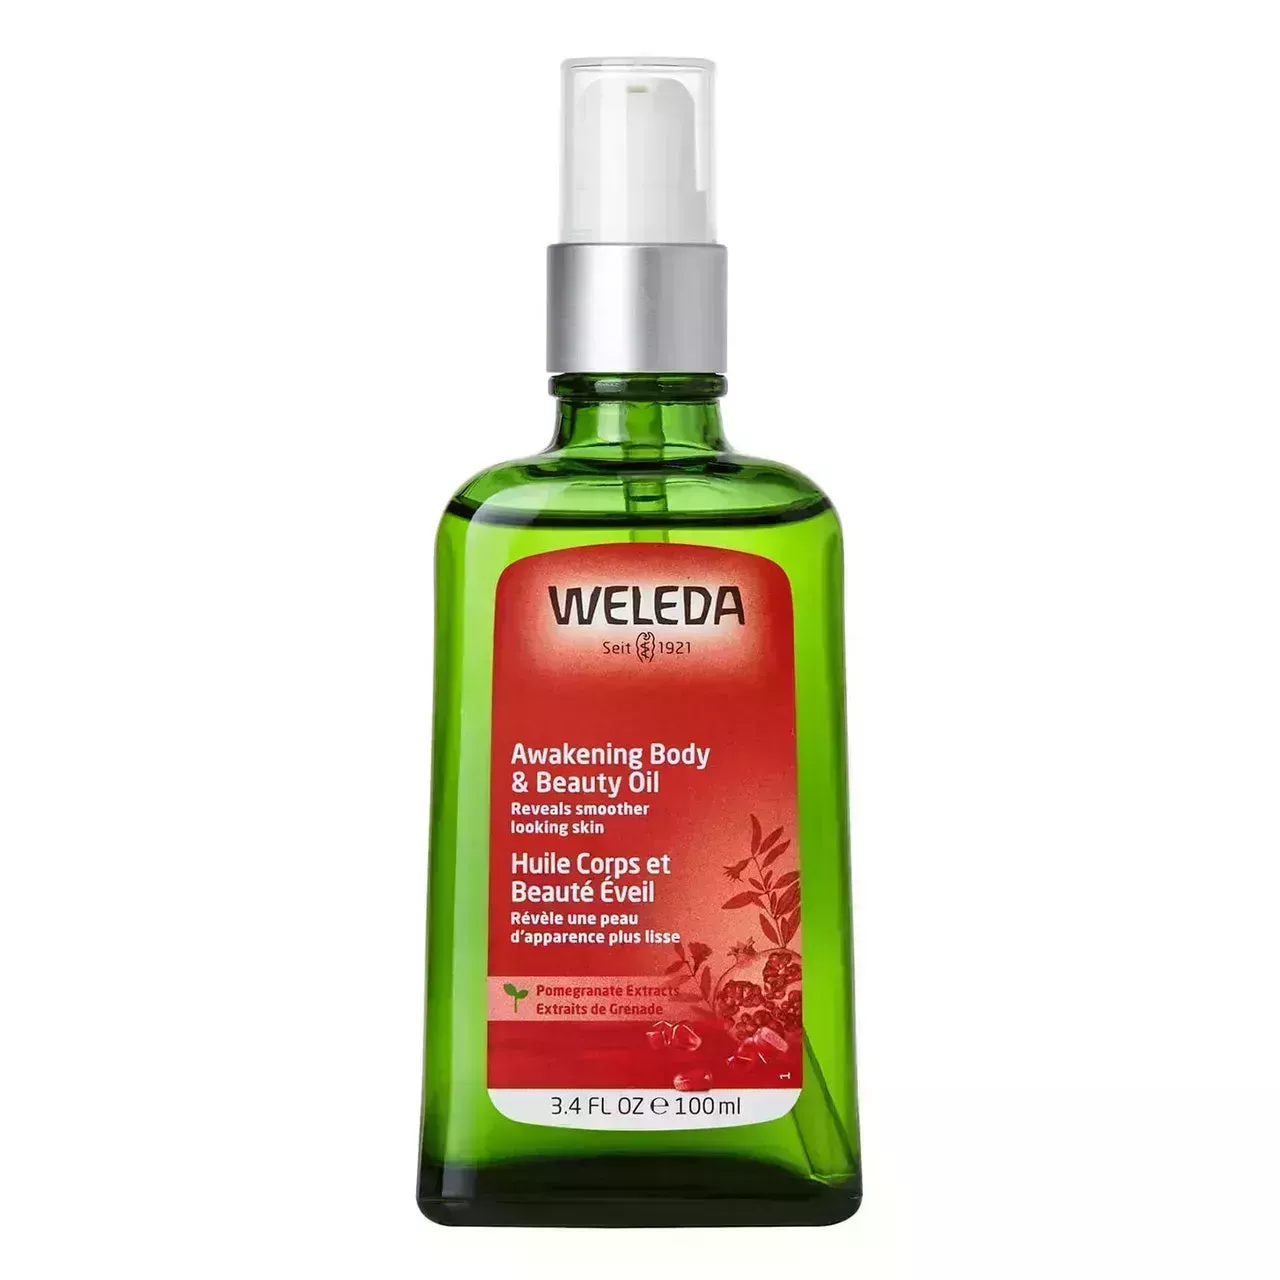 Weleda Awakening Body & Beauty Oil green spray bottle with red label on white background